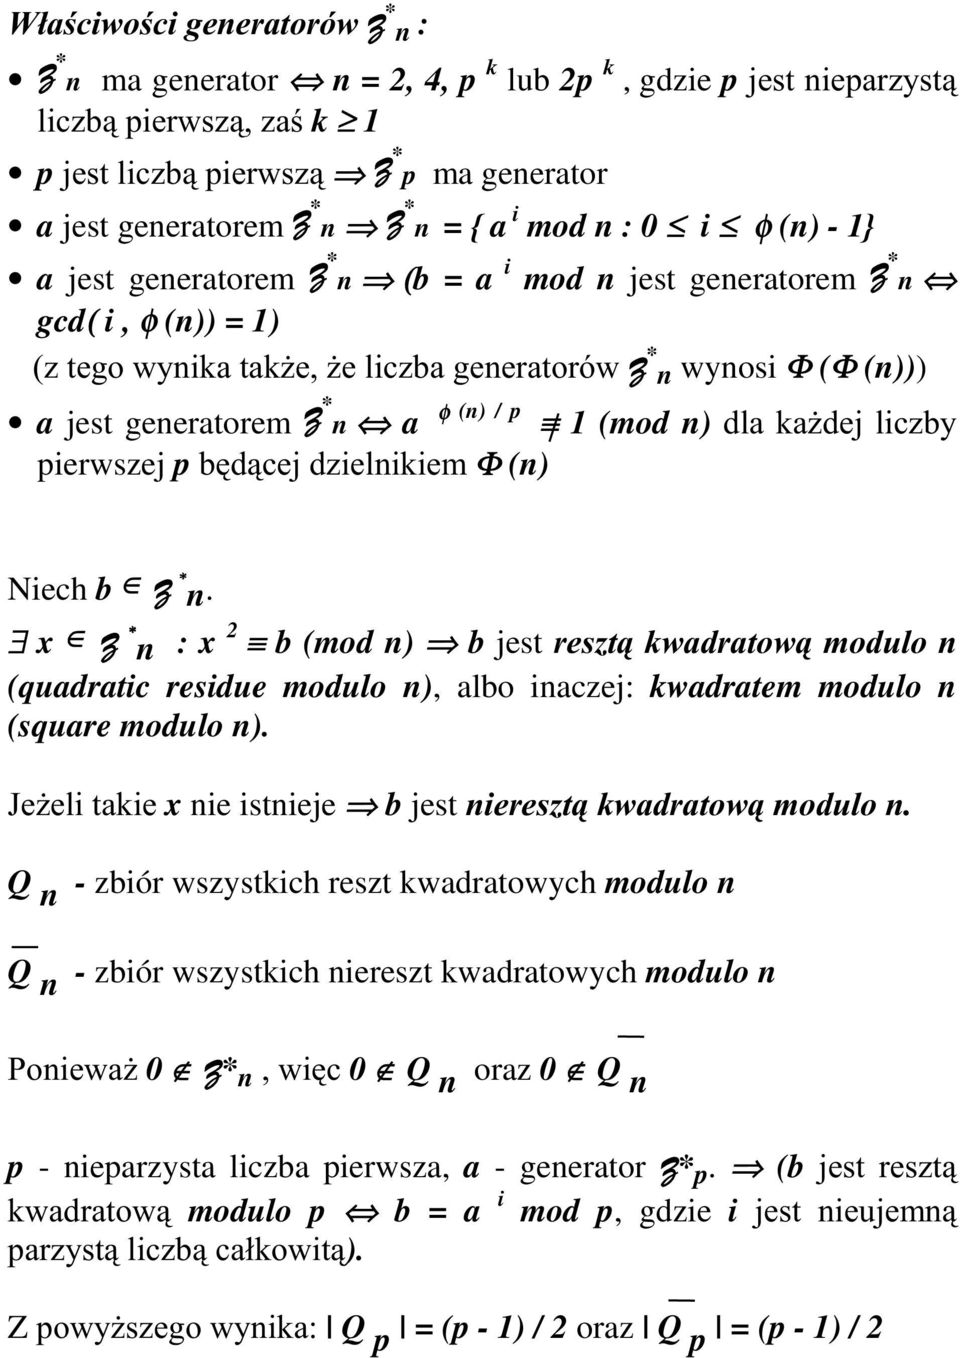 GODND*GHMOLF]E\ pierwszej pegfhmg]lhoqlnlhpφ (n) Niech b =n. x = n : x 2 b (mod n) b jest UHV]WNZDGUDWRZPRGXORQ (quadratic residue modulo n), albo inaczej: kwadratem modulo n (square modulo n).